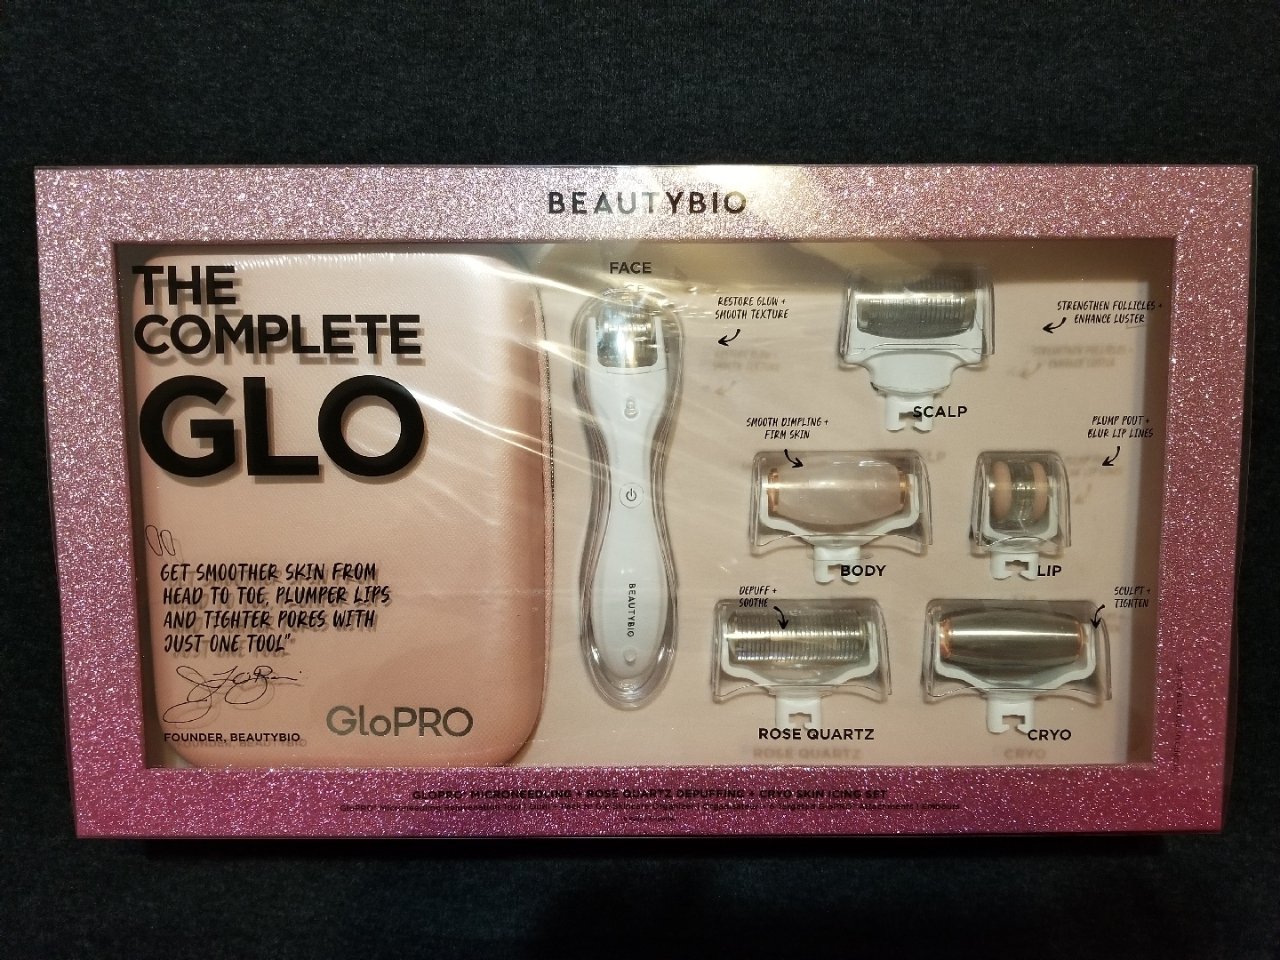 The Complete Glo – BeautyBio